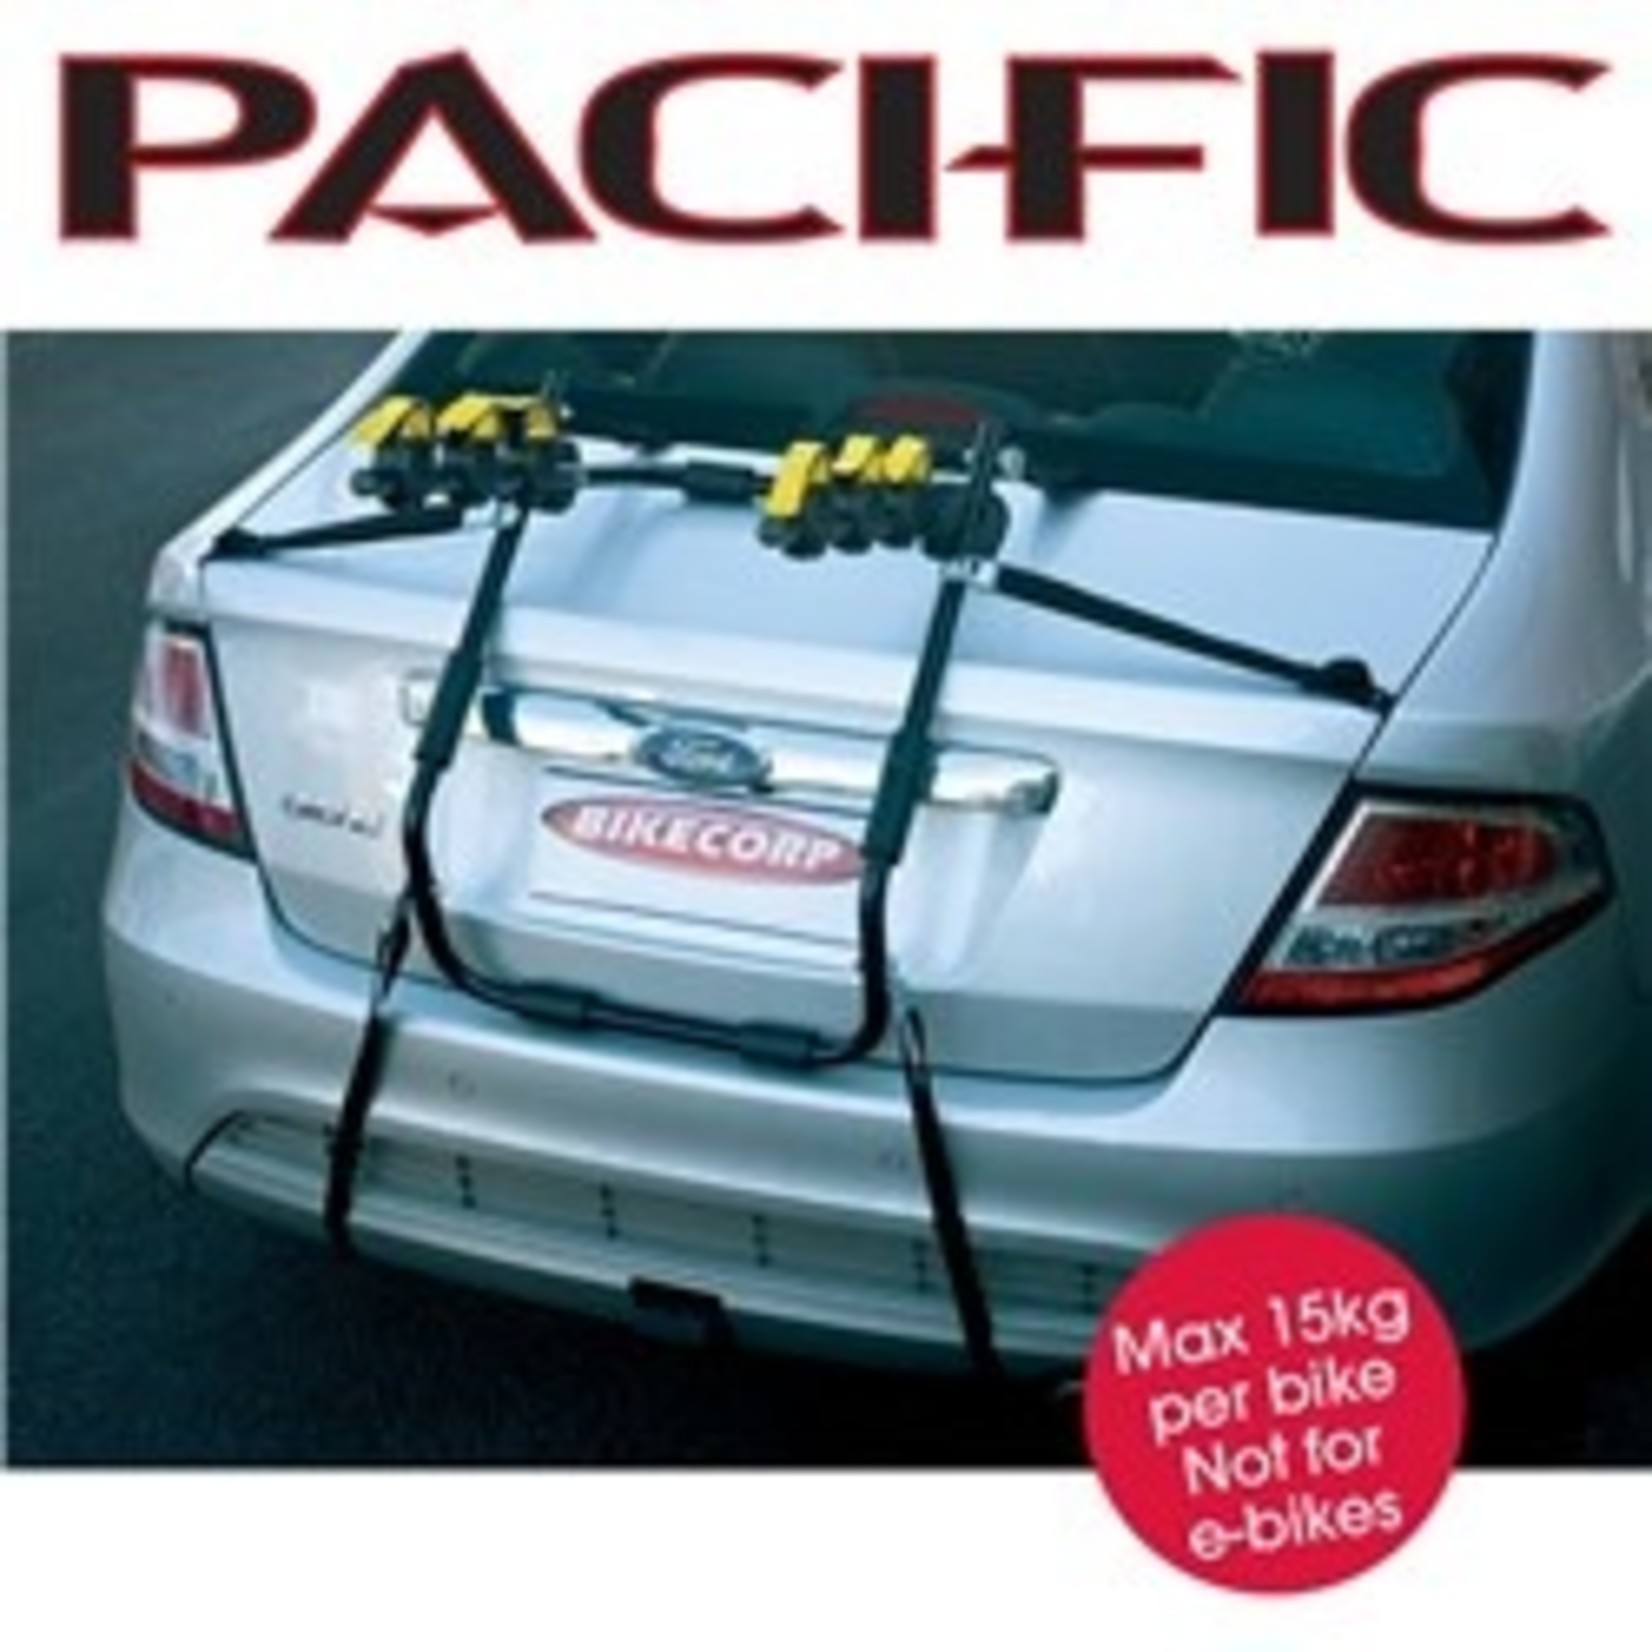 pacific Pacific Bike/Cycling 3 Bike Carrier Boot Rack Maximum 15kg Per Bike